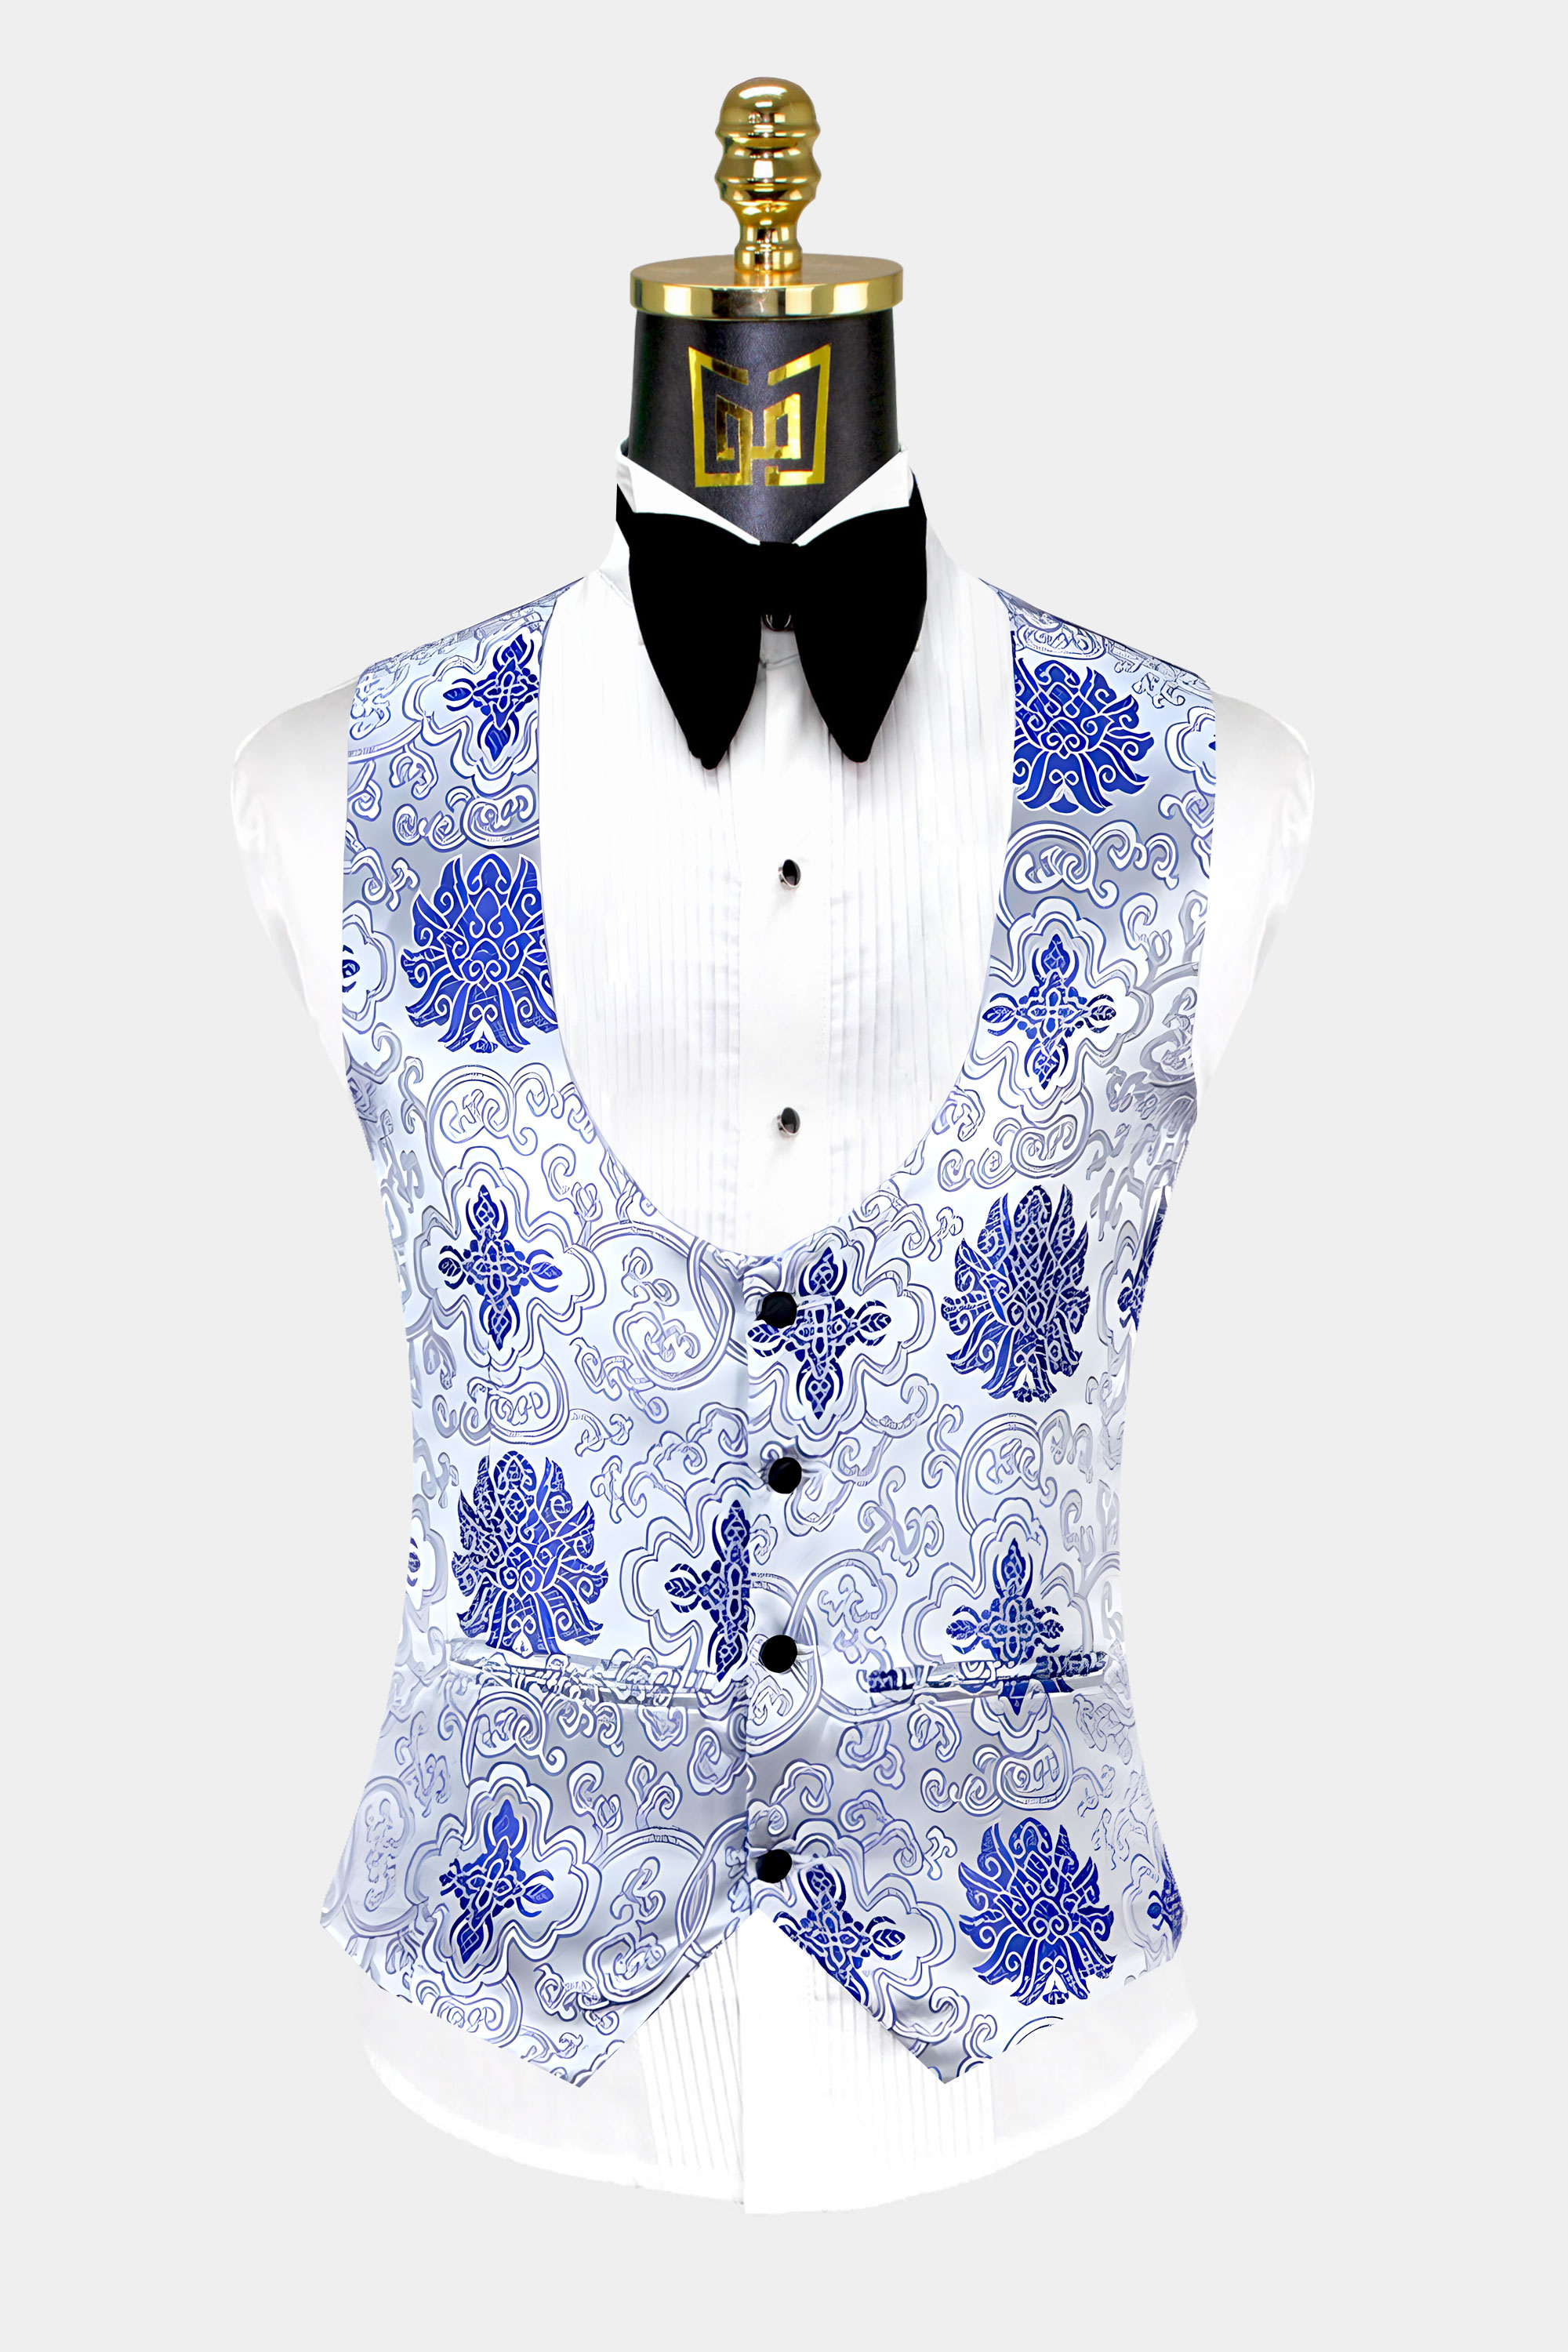 Royal-Blue-and-Silver-Tuxedo-Vest-from-Gentlemansguru.com